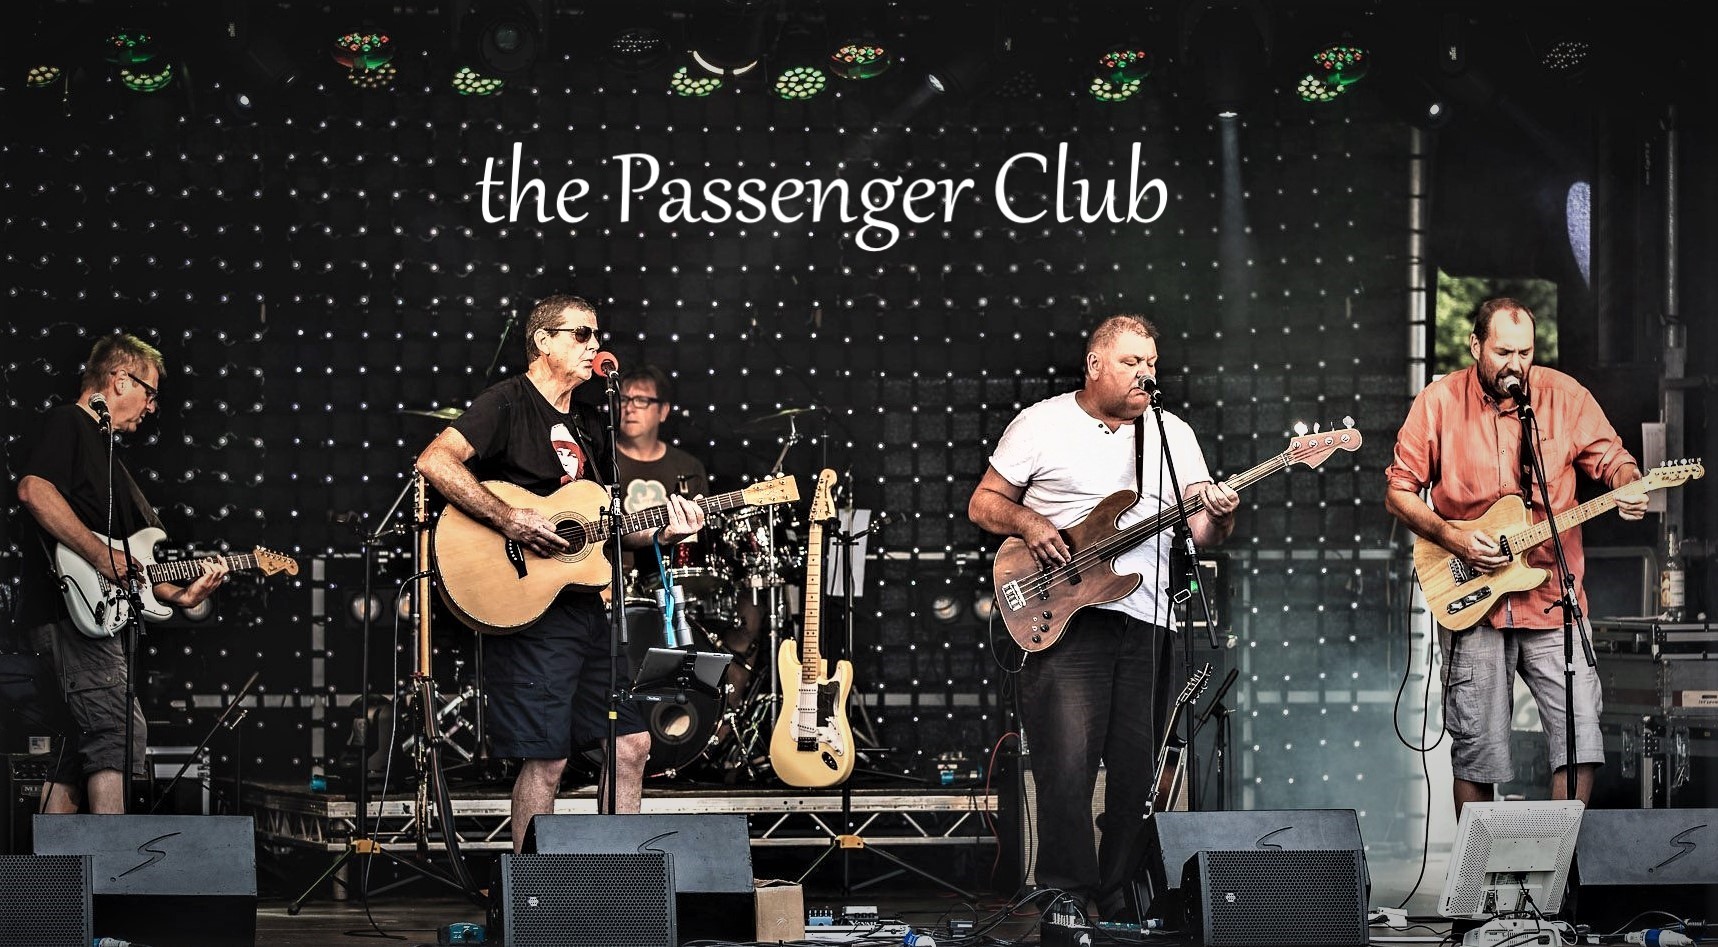 The Passenger Club